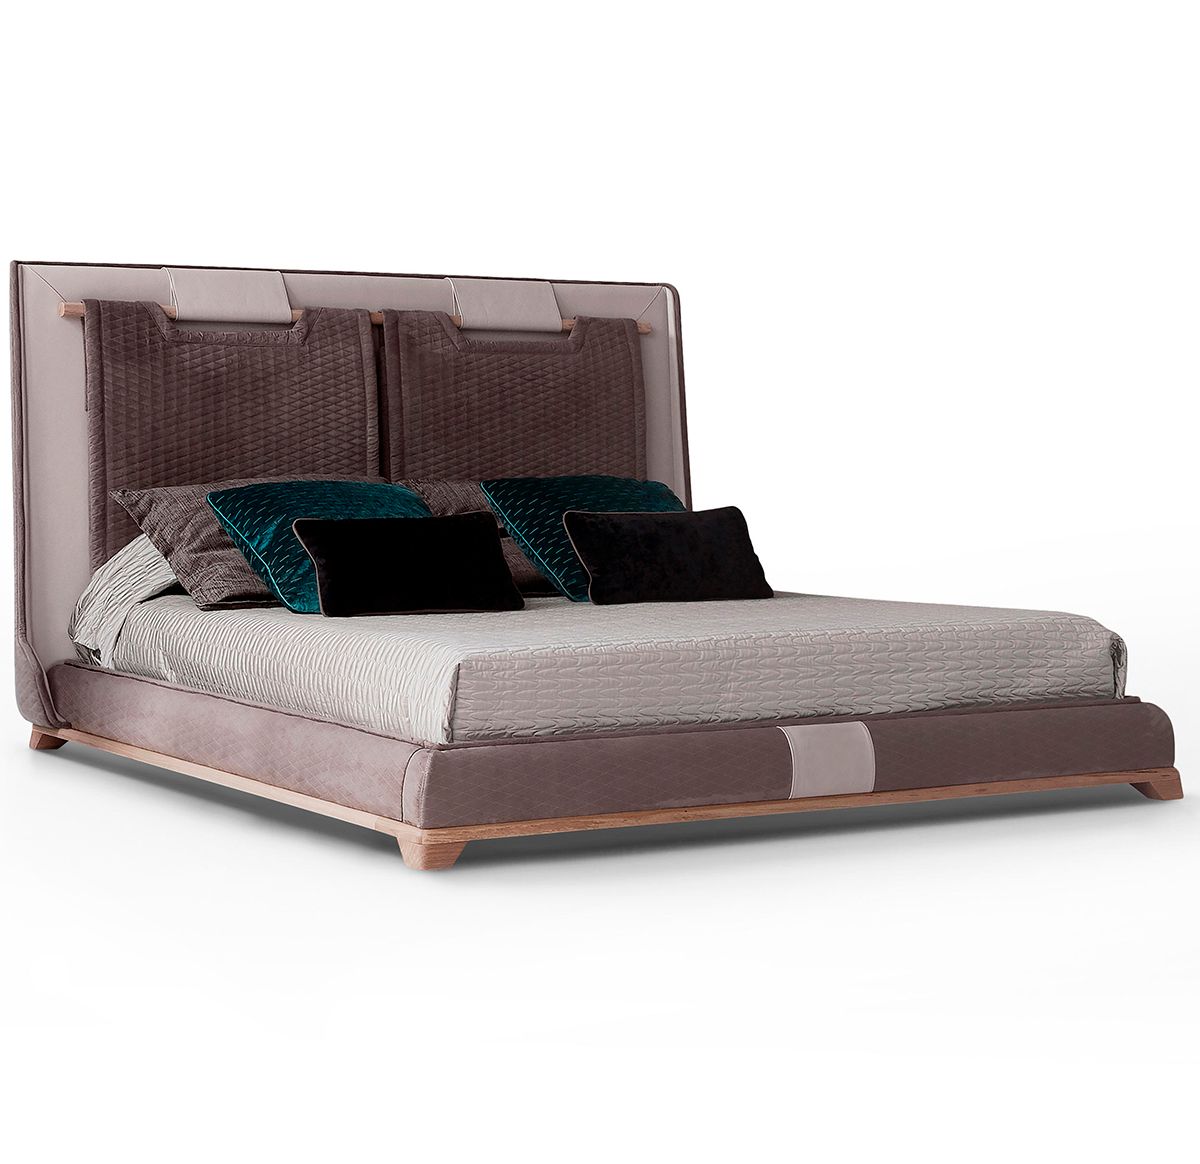 Double bed 180x200 grey Tecni Nova Wood